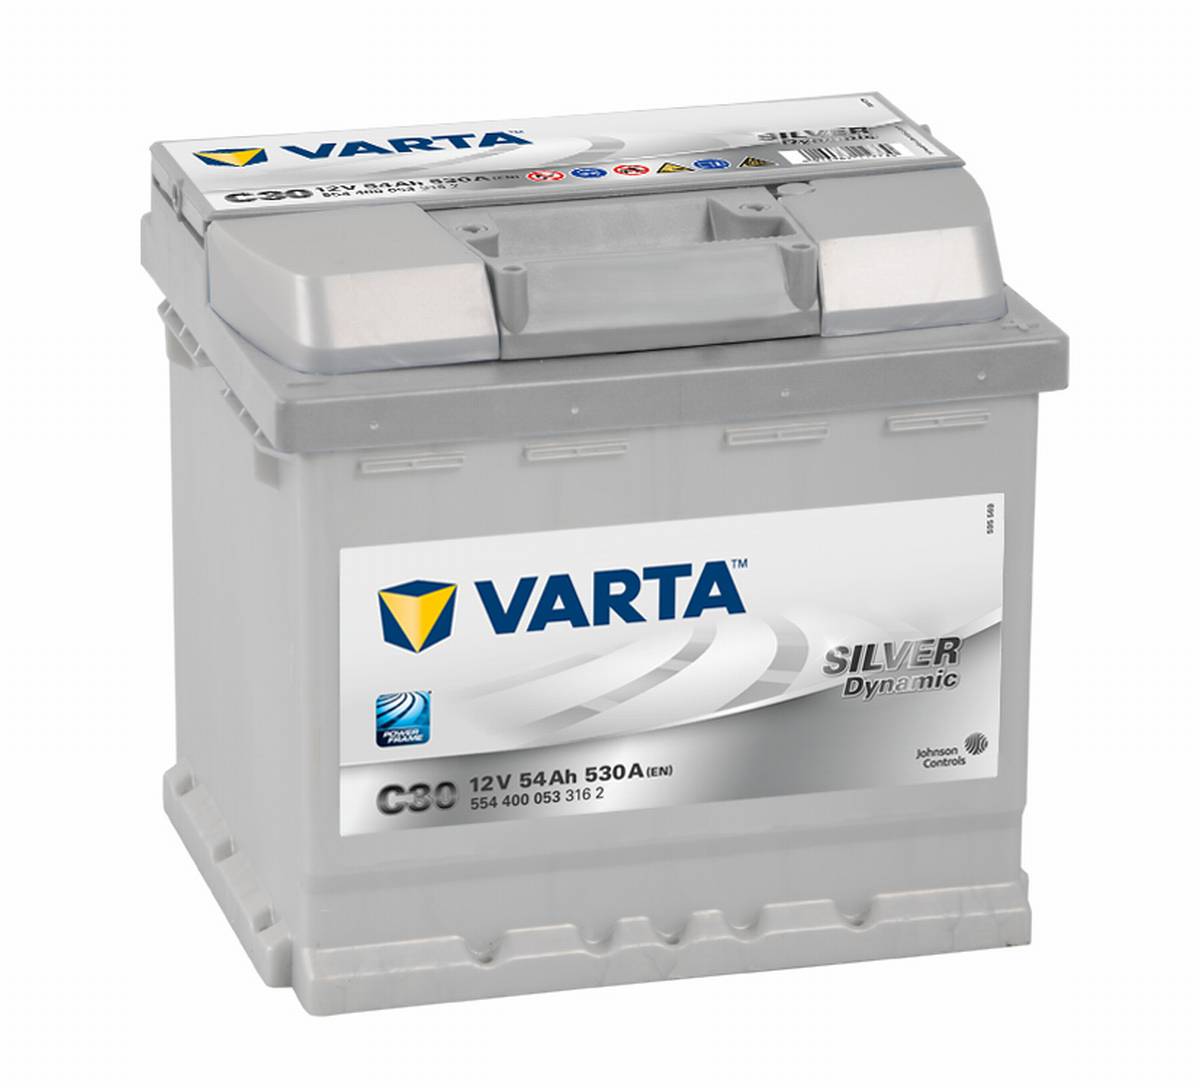 VARTA C30 Silver Dynamic 12V 54Ah 530A Autobatterie 554 400 053